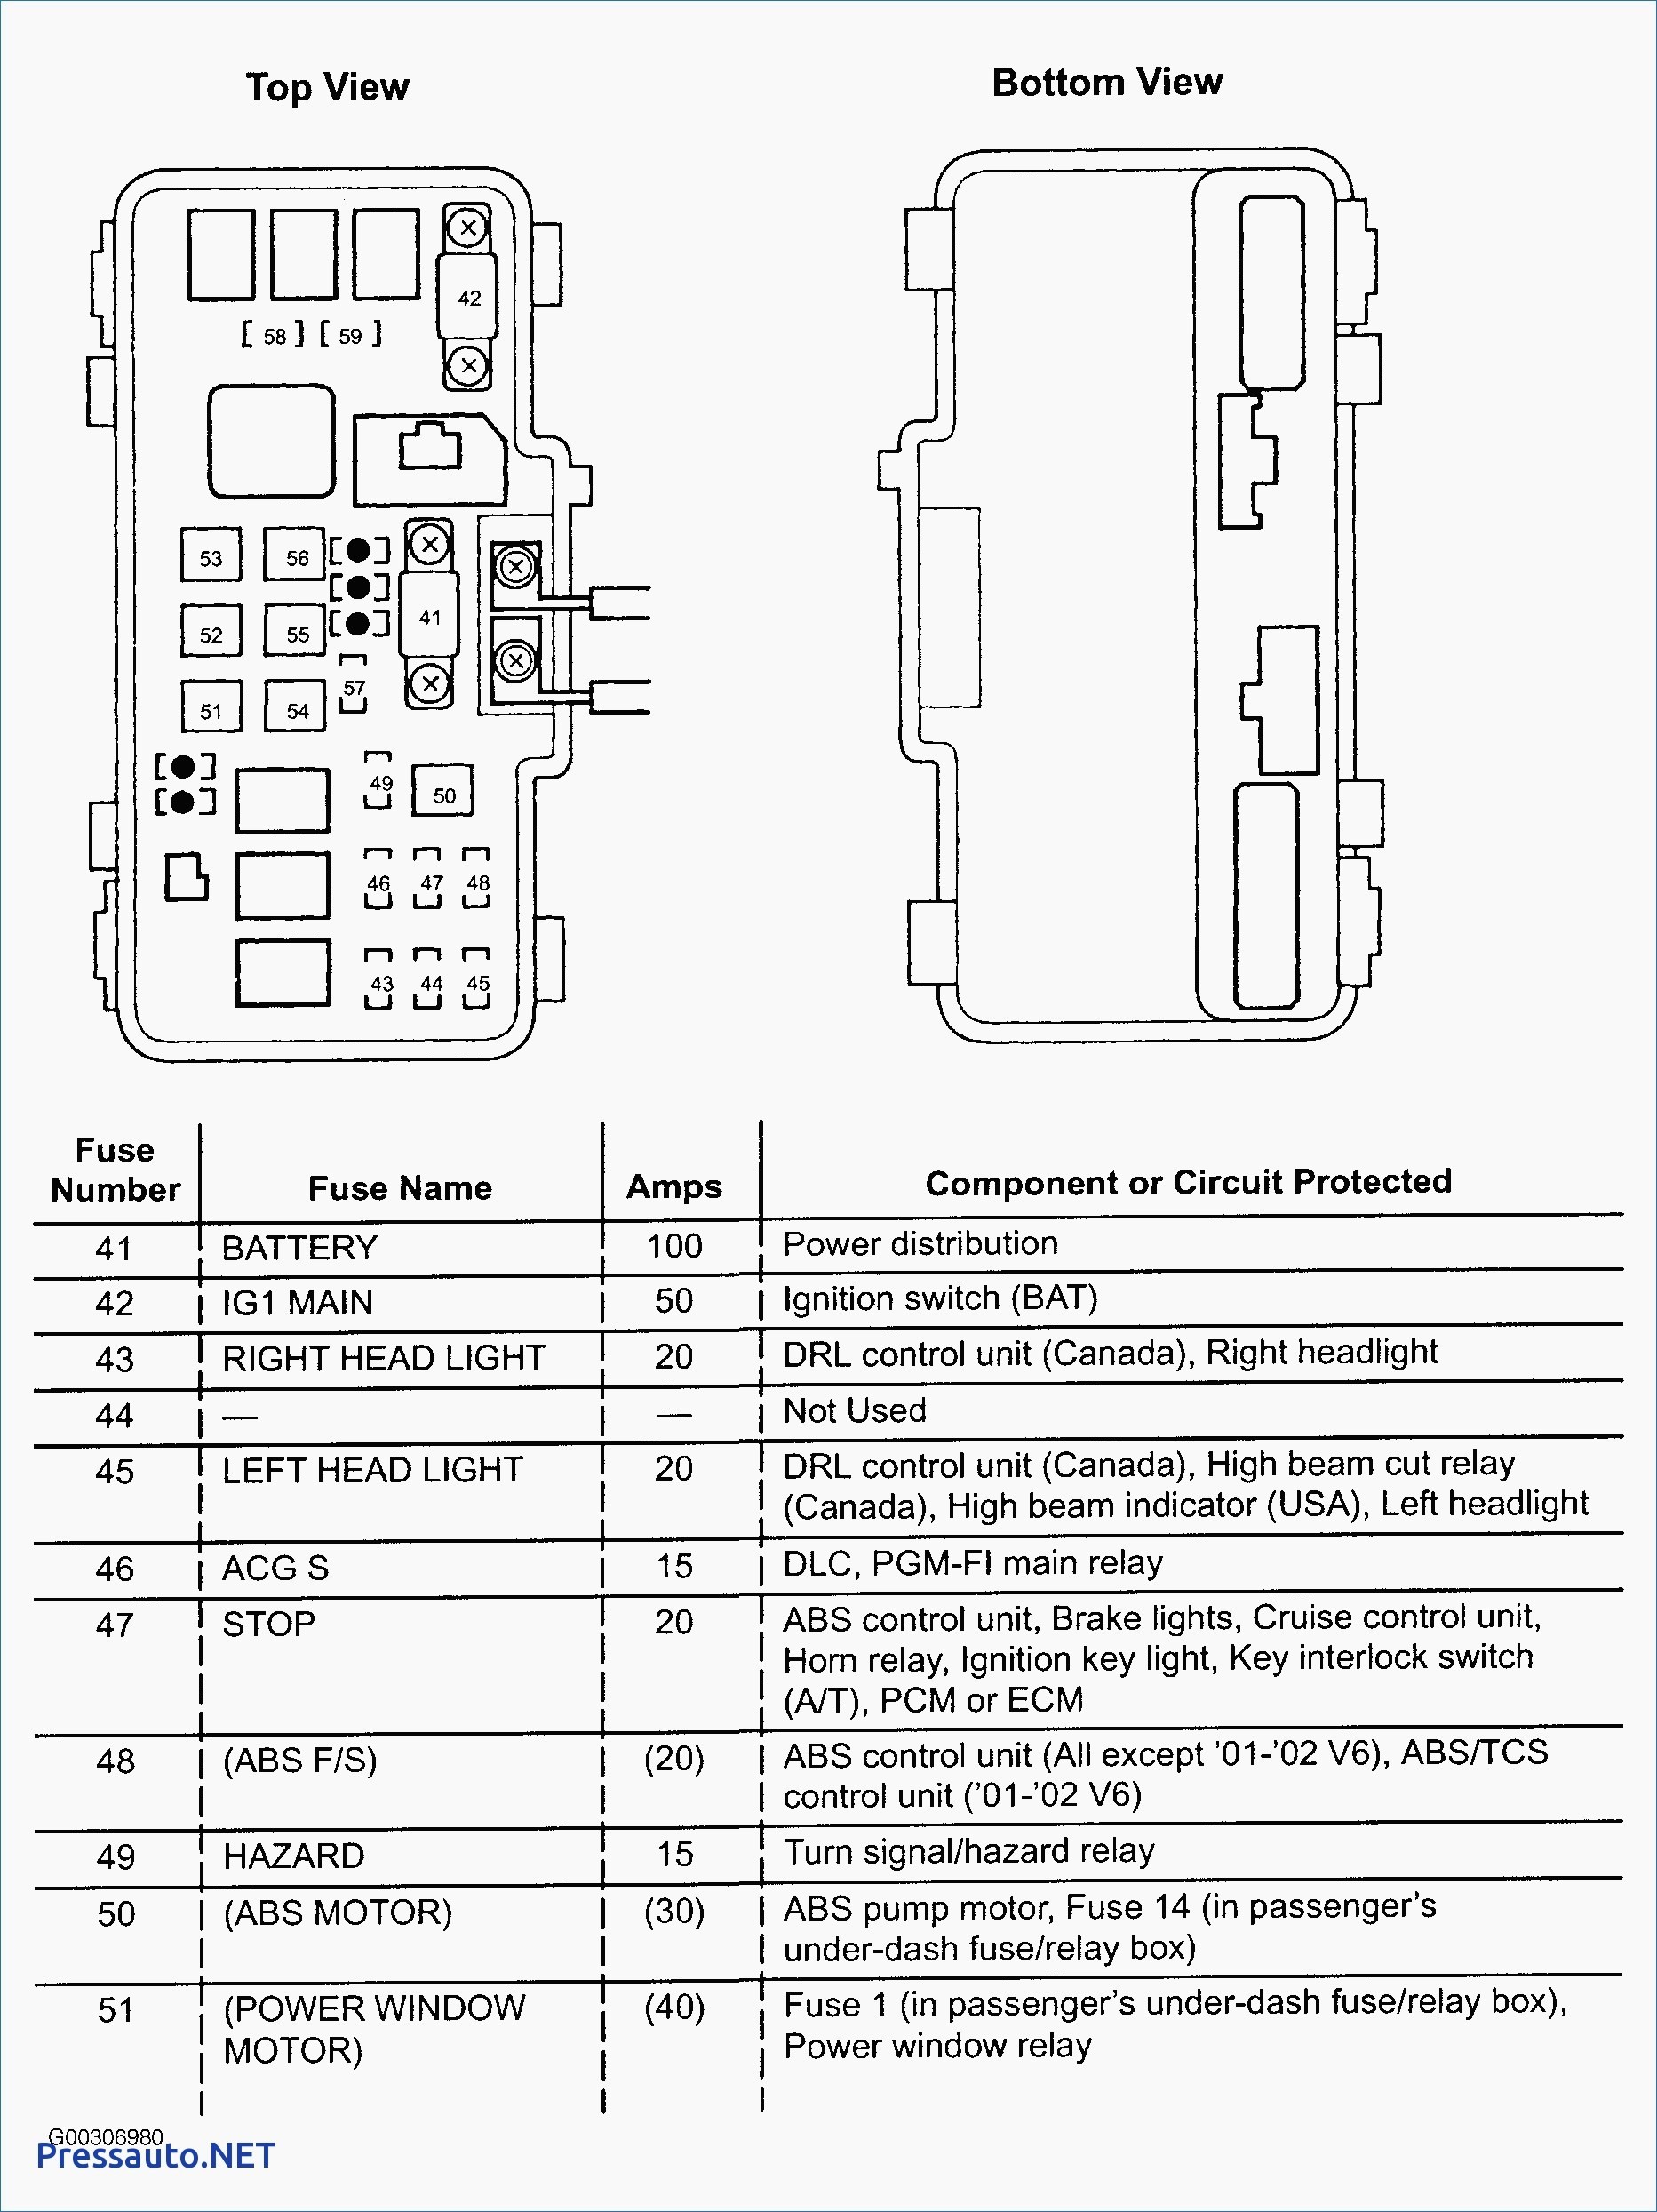 97 Honda Accord Transmission Diagram Honda Accord 1994 Engine Diagram Best 2002 Honda Accord Wiring Of 97 Honda Accord Transmission Diagram